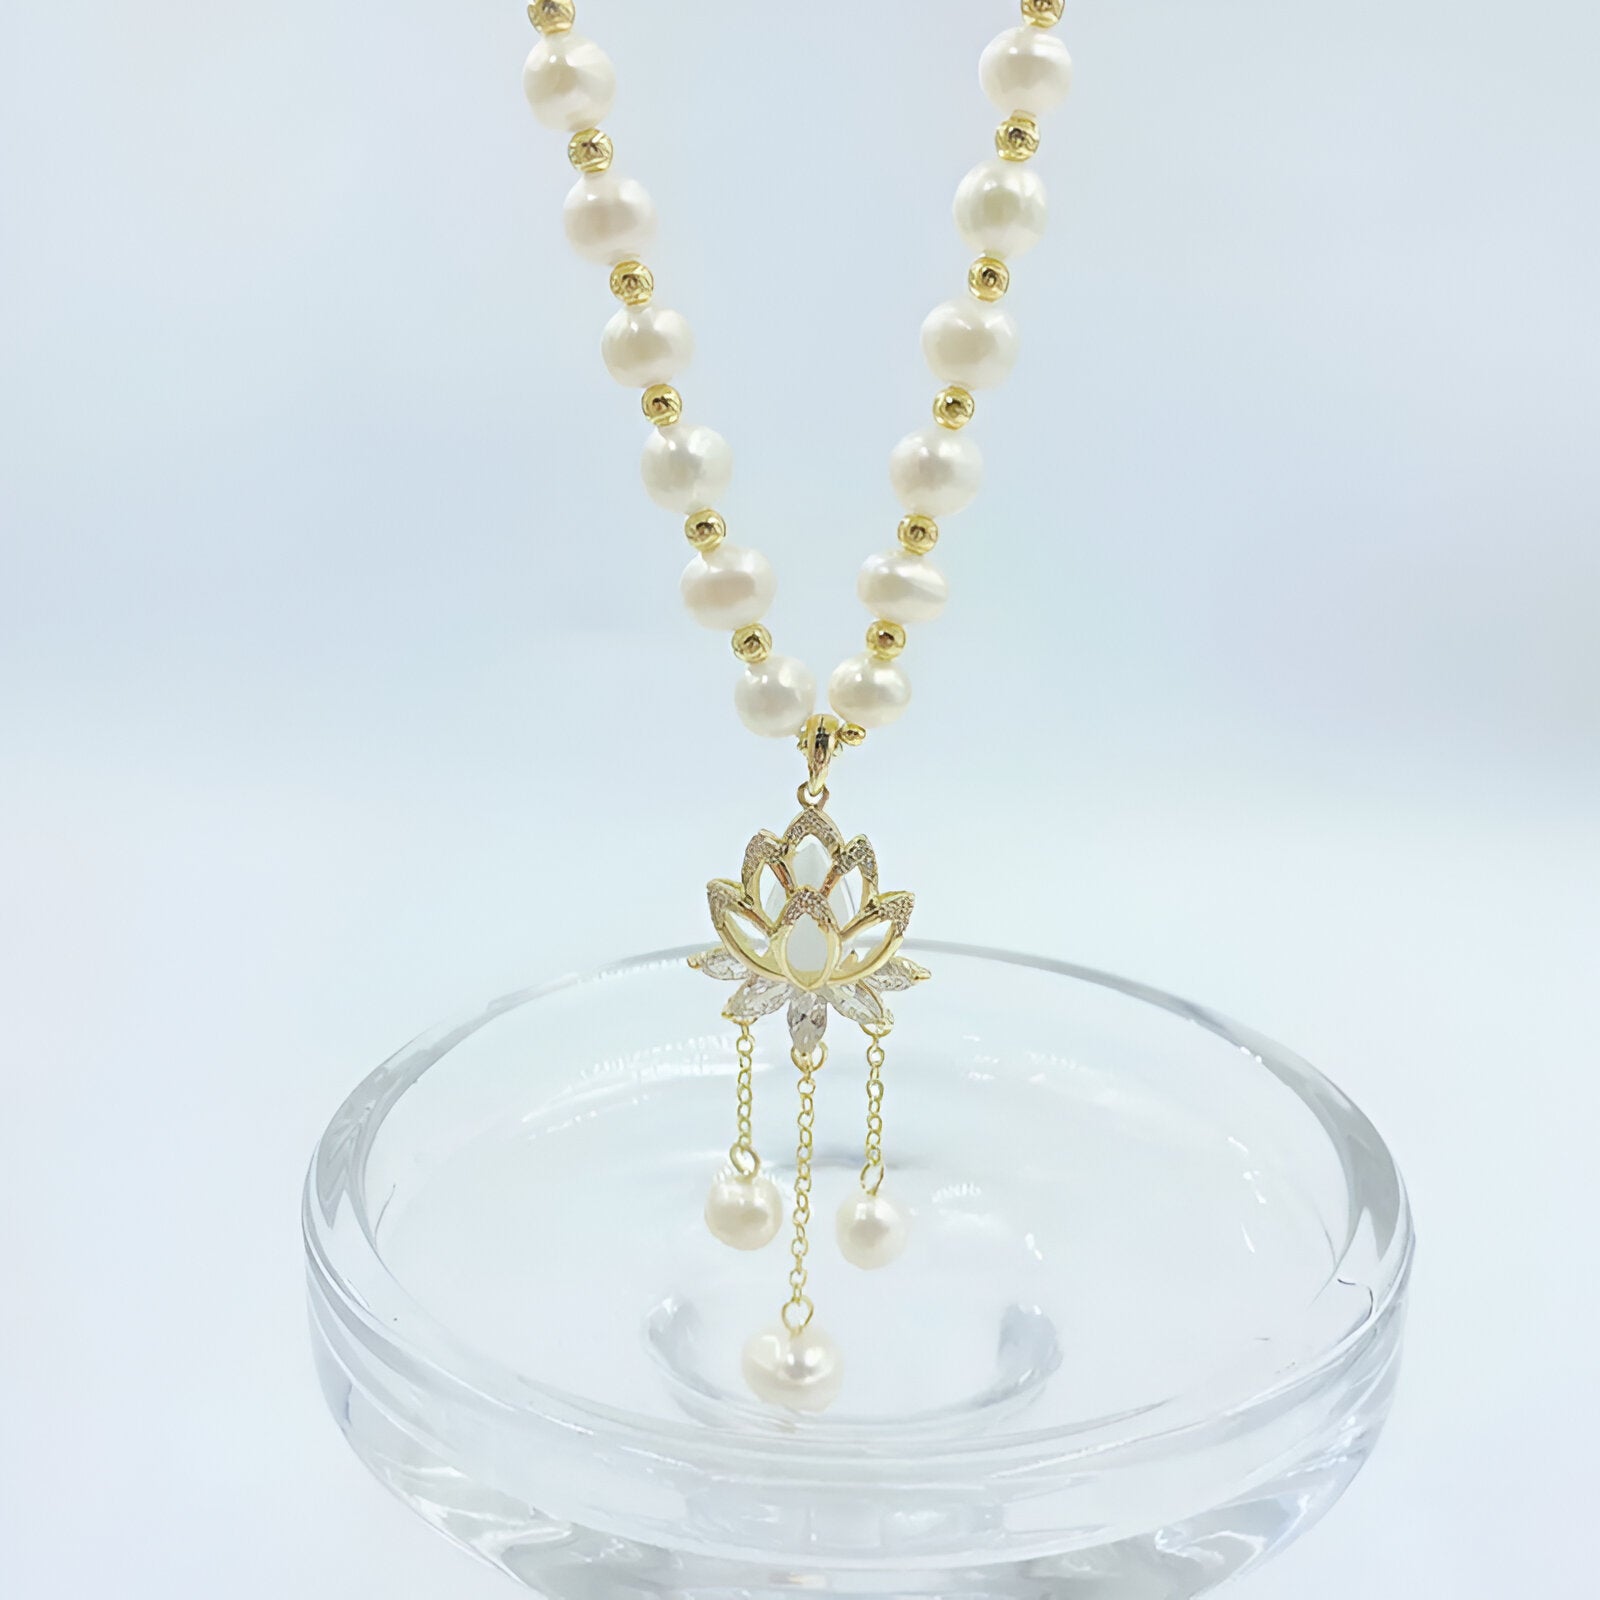 Lotus pearl necklace, elegant and versatile